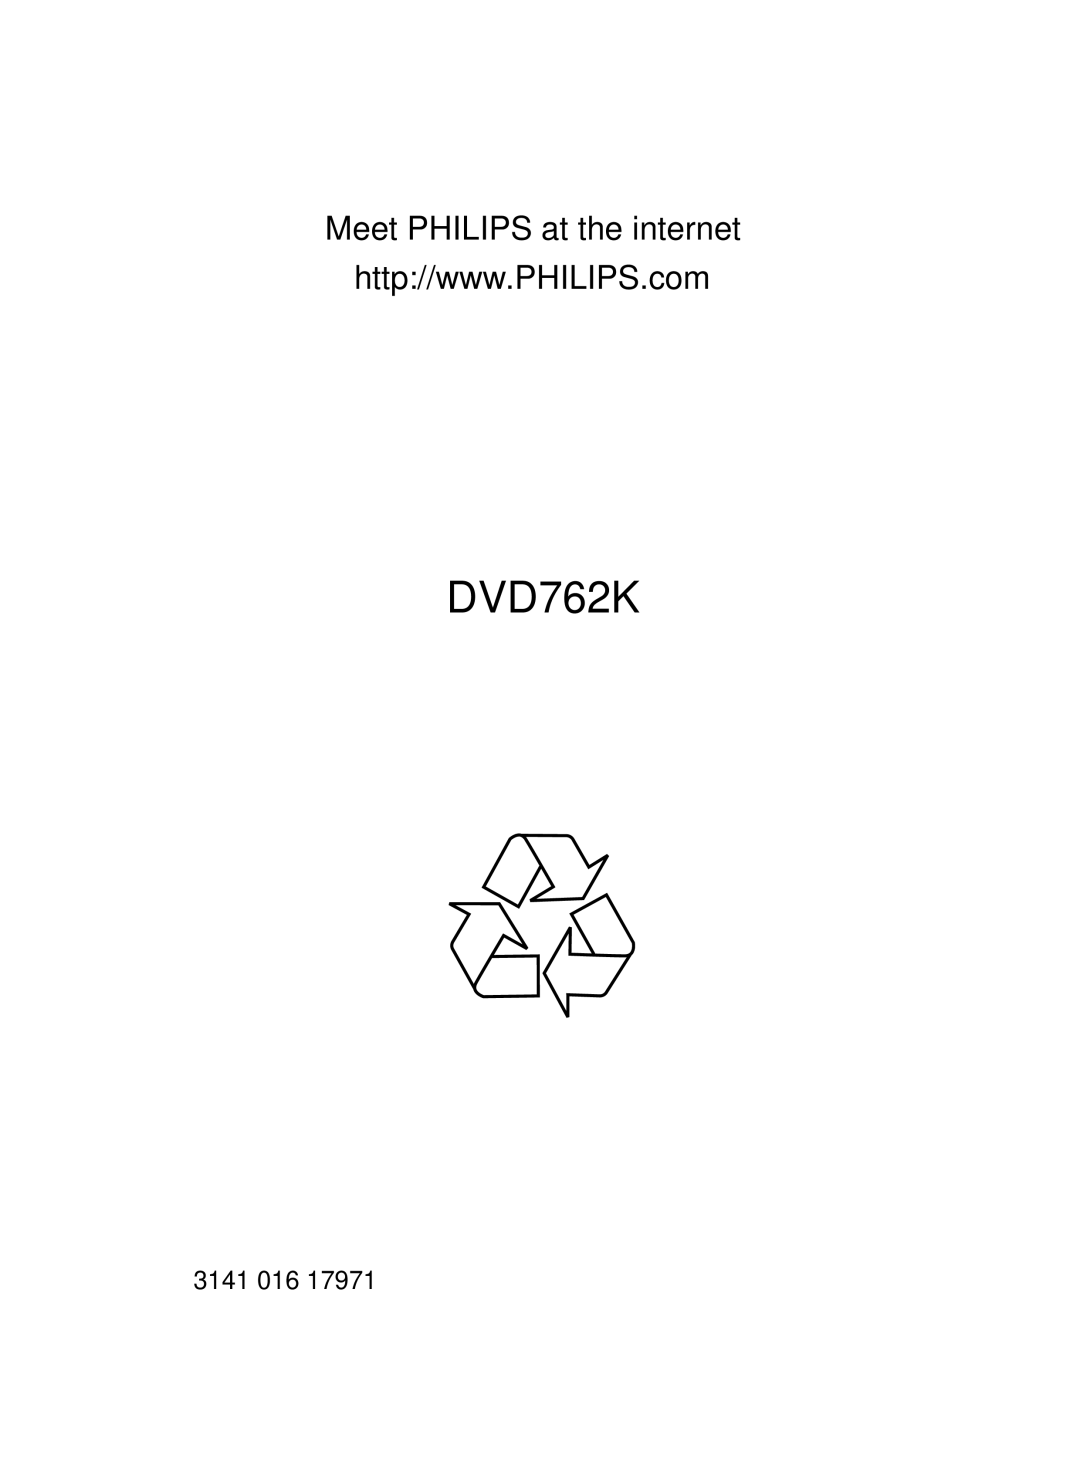 Philips DVD762K manual 